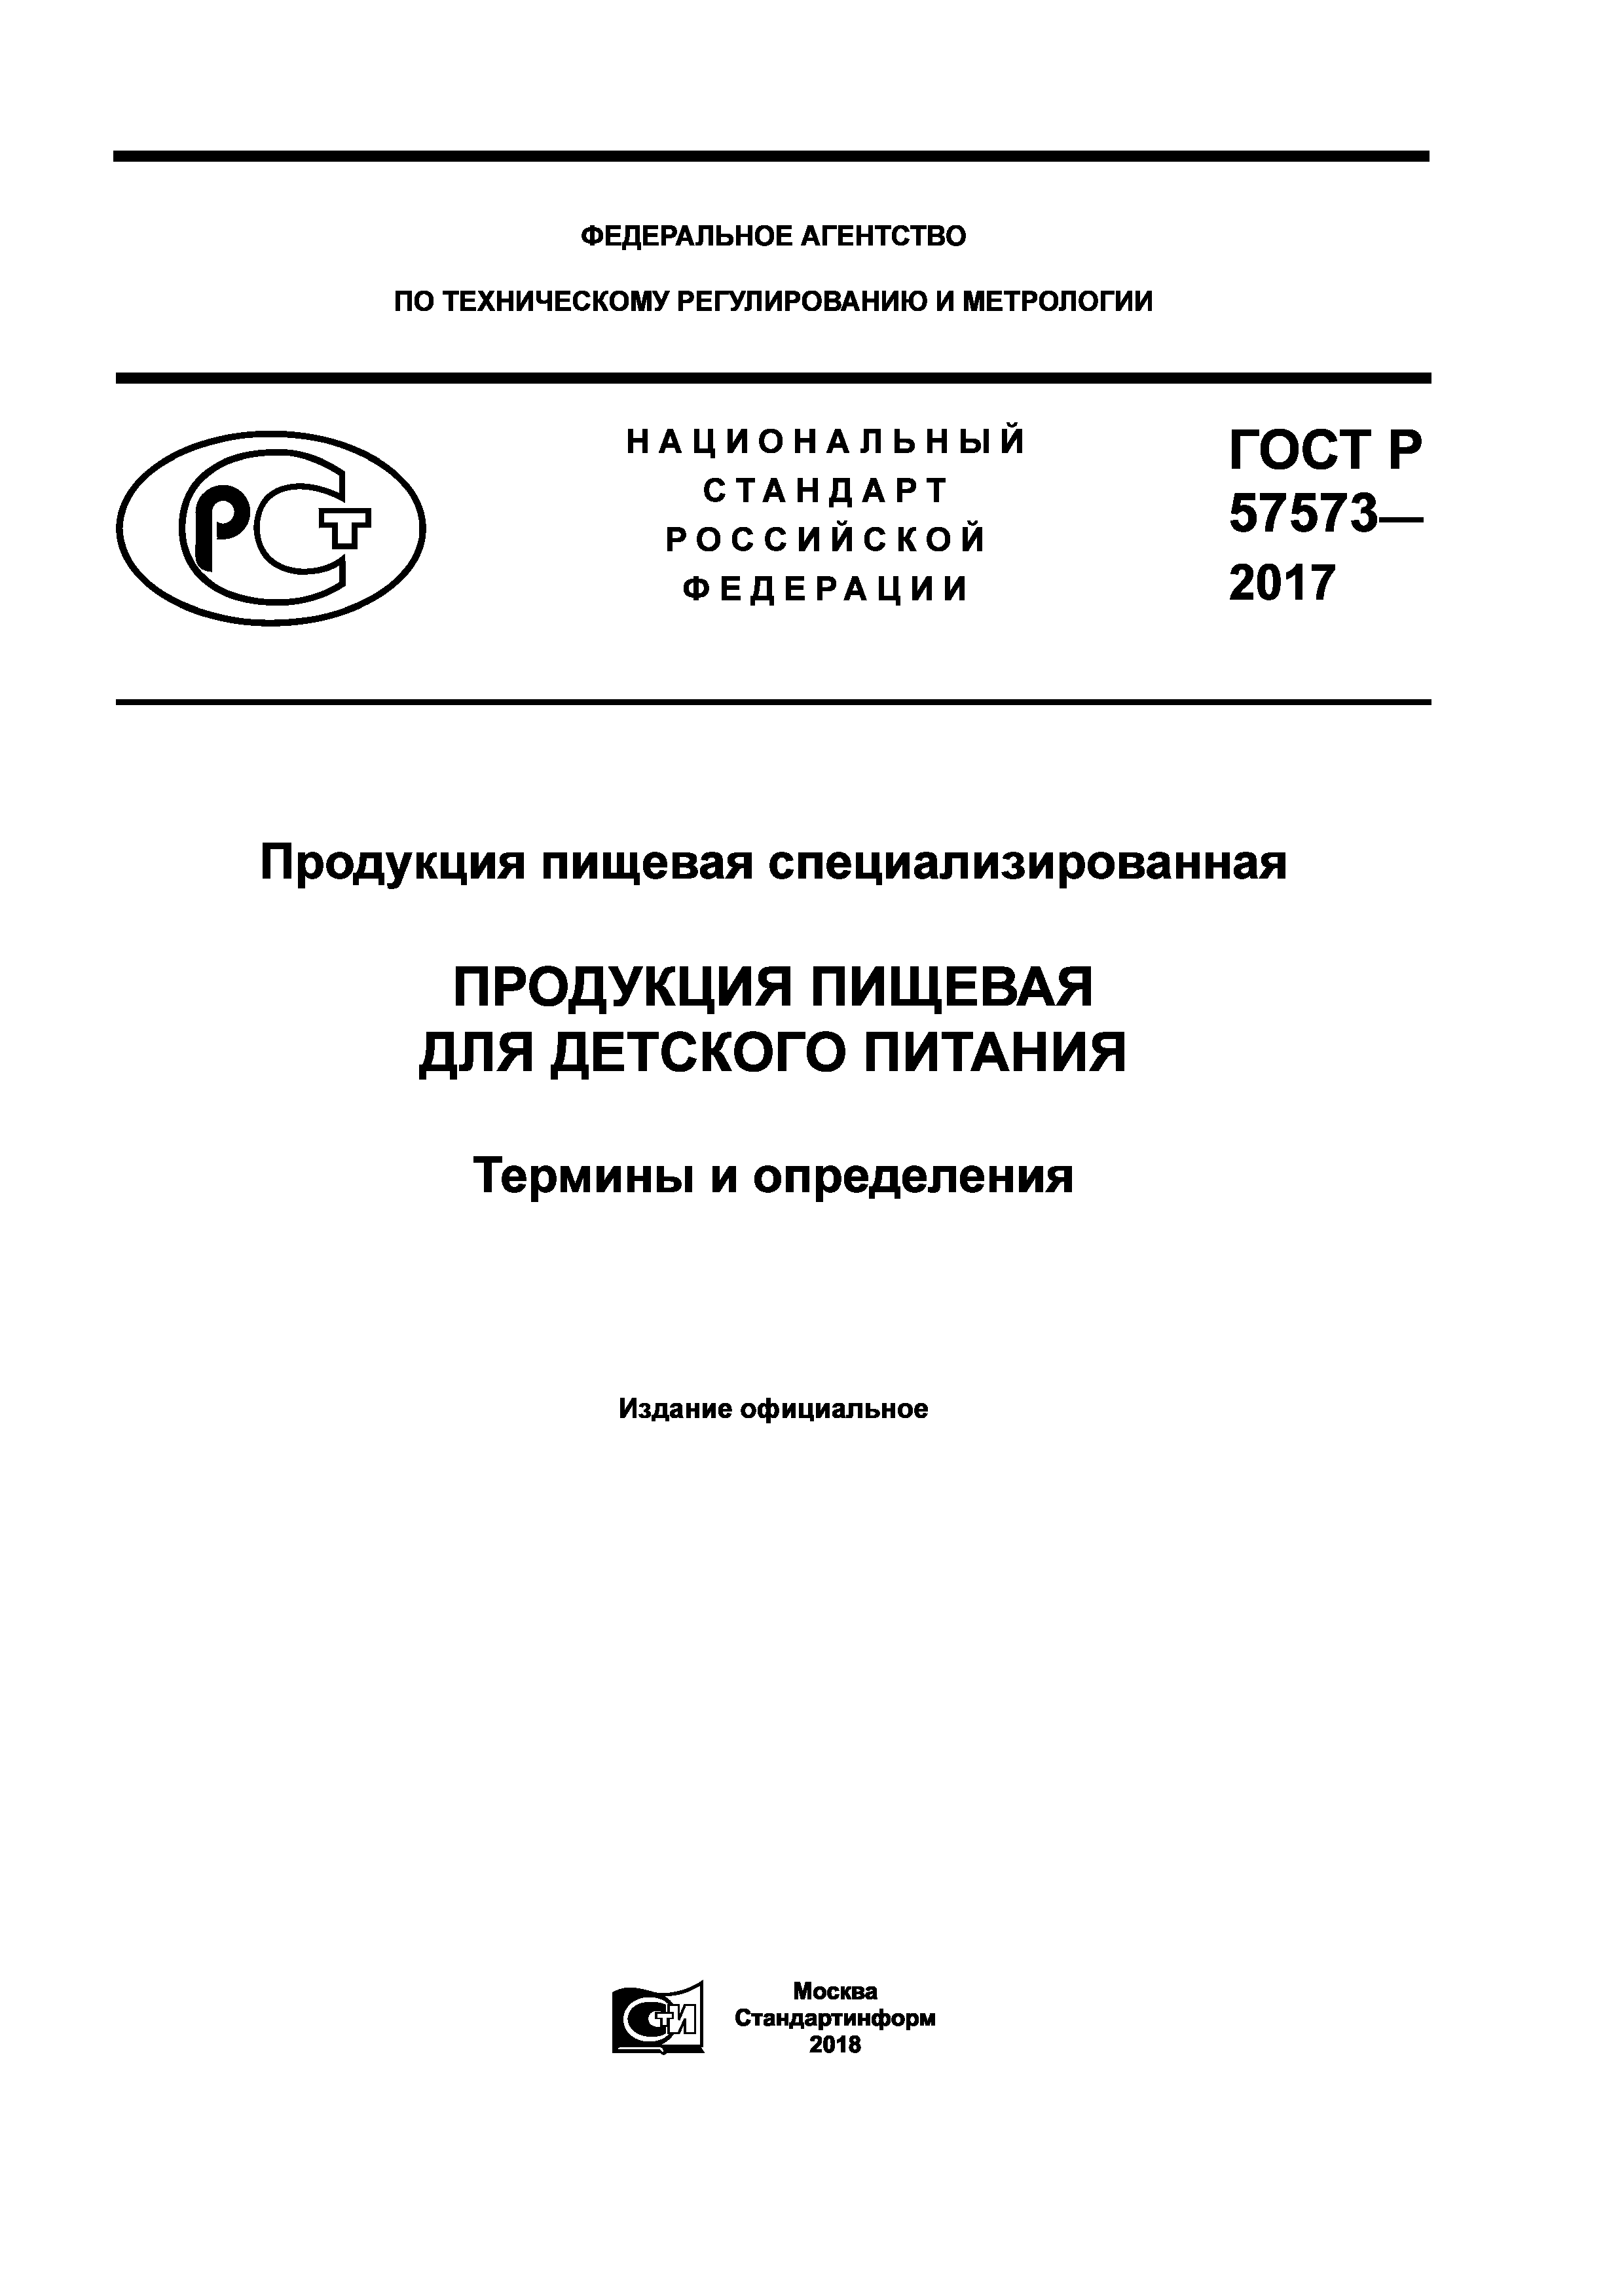 ГОСТ Р 57573-2017